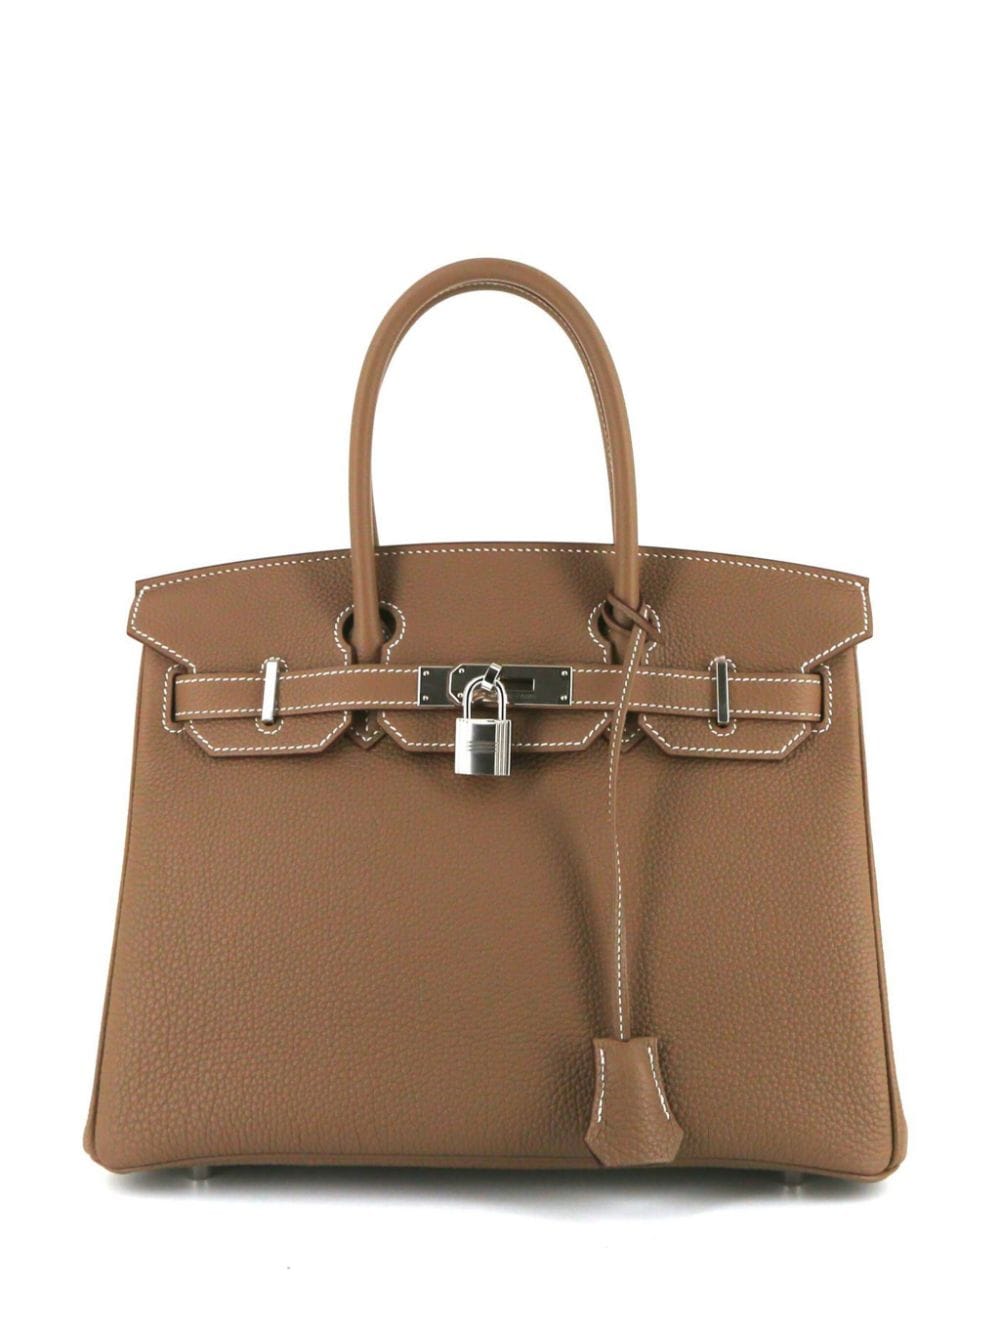 Women's Hermes Birkin Bag 30cm Etoupe Togo Leather Handbag on Sale